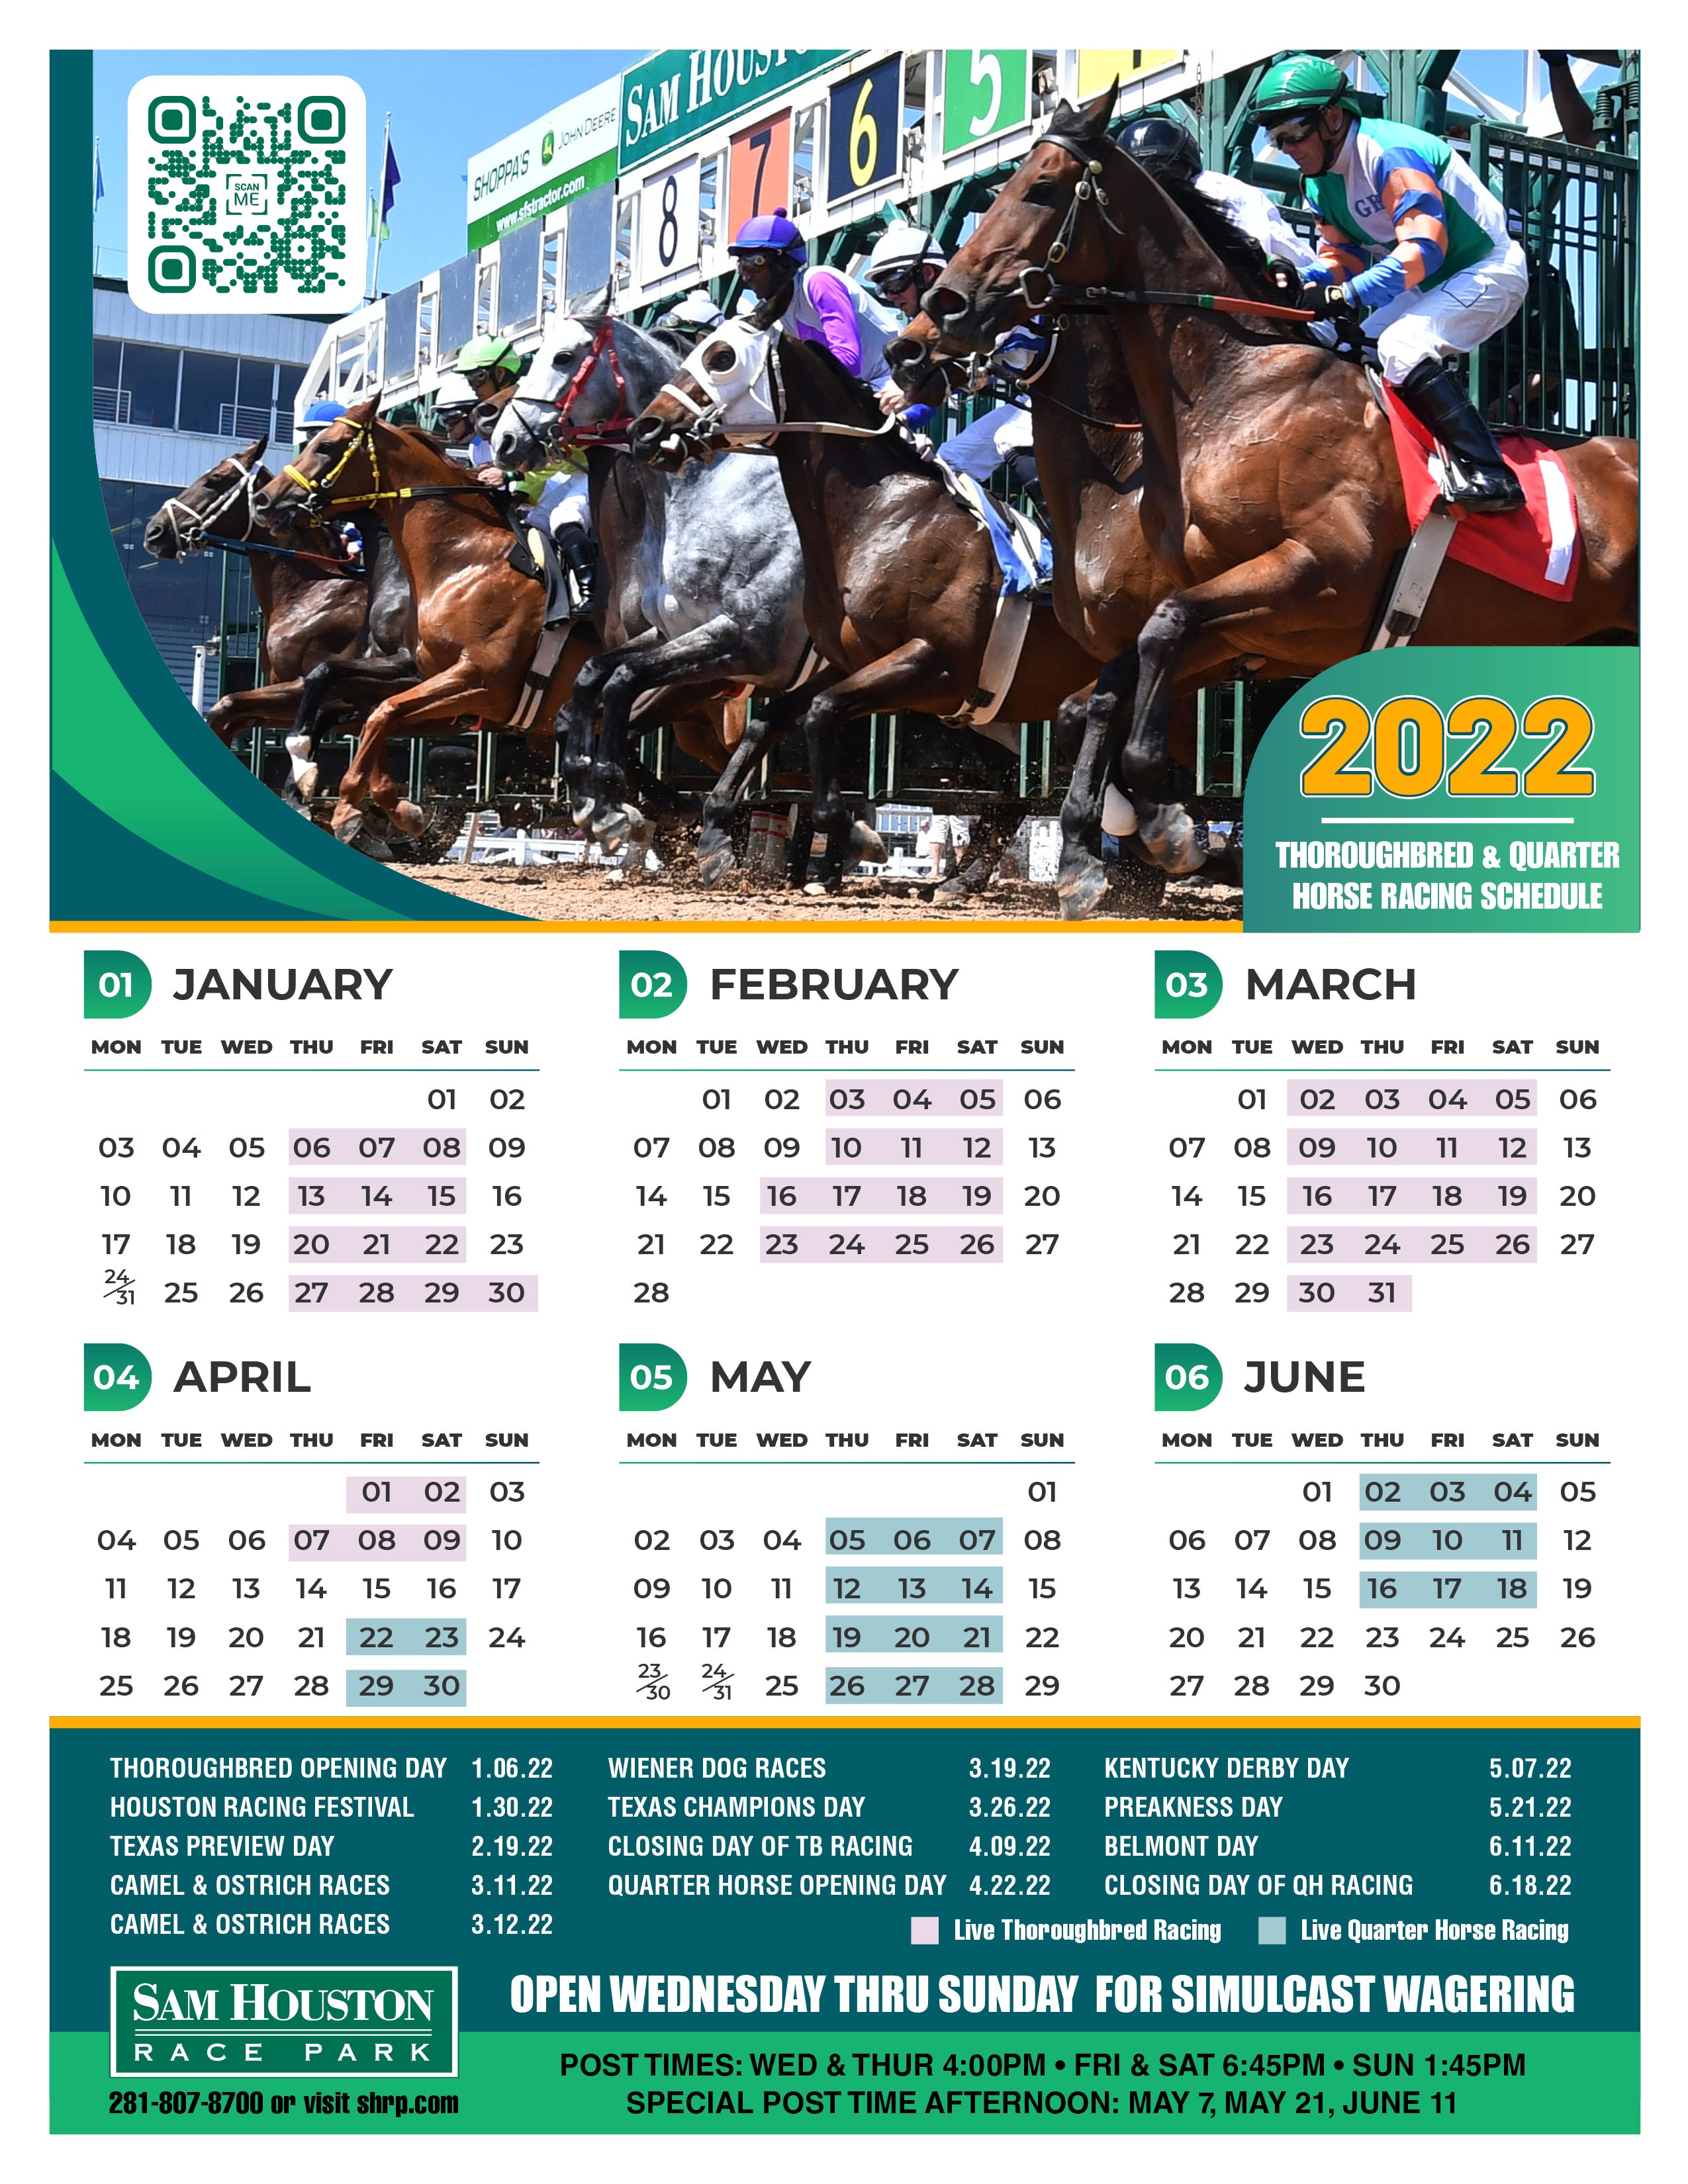 Thoroughbred Racing Calendar 2022 2021 Live Racing Calendar | Sam Houston Race Park